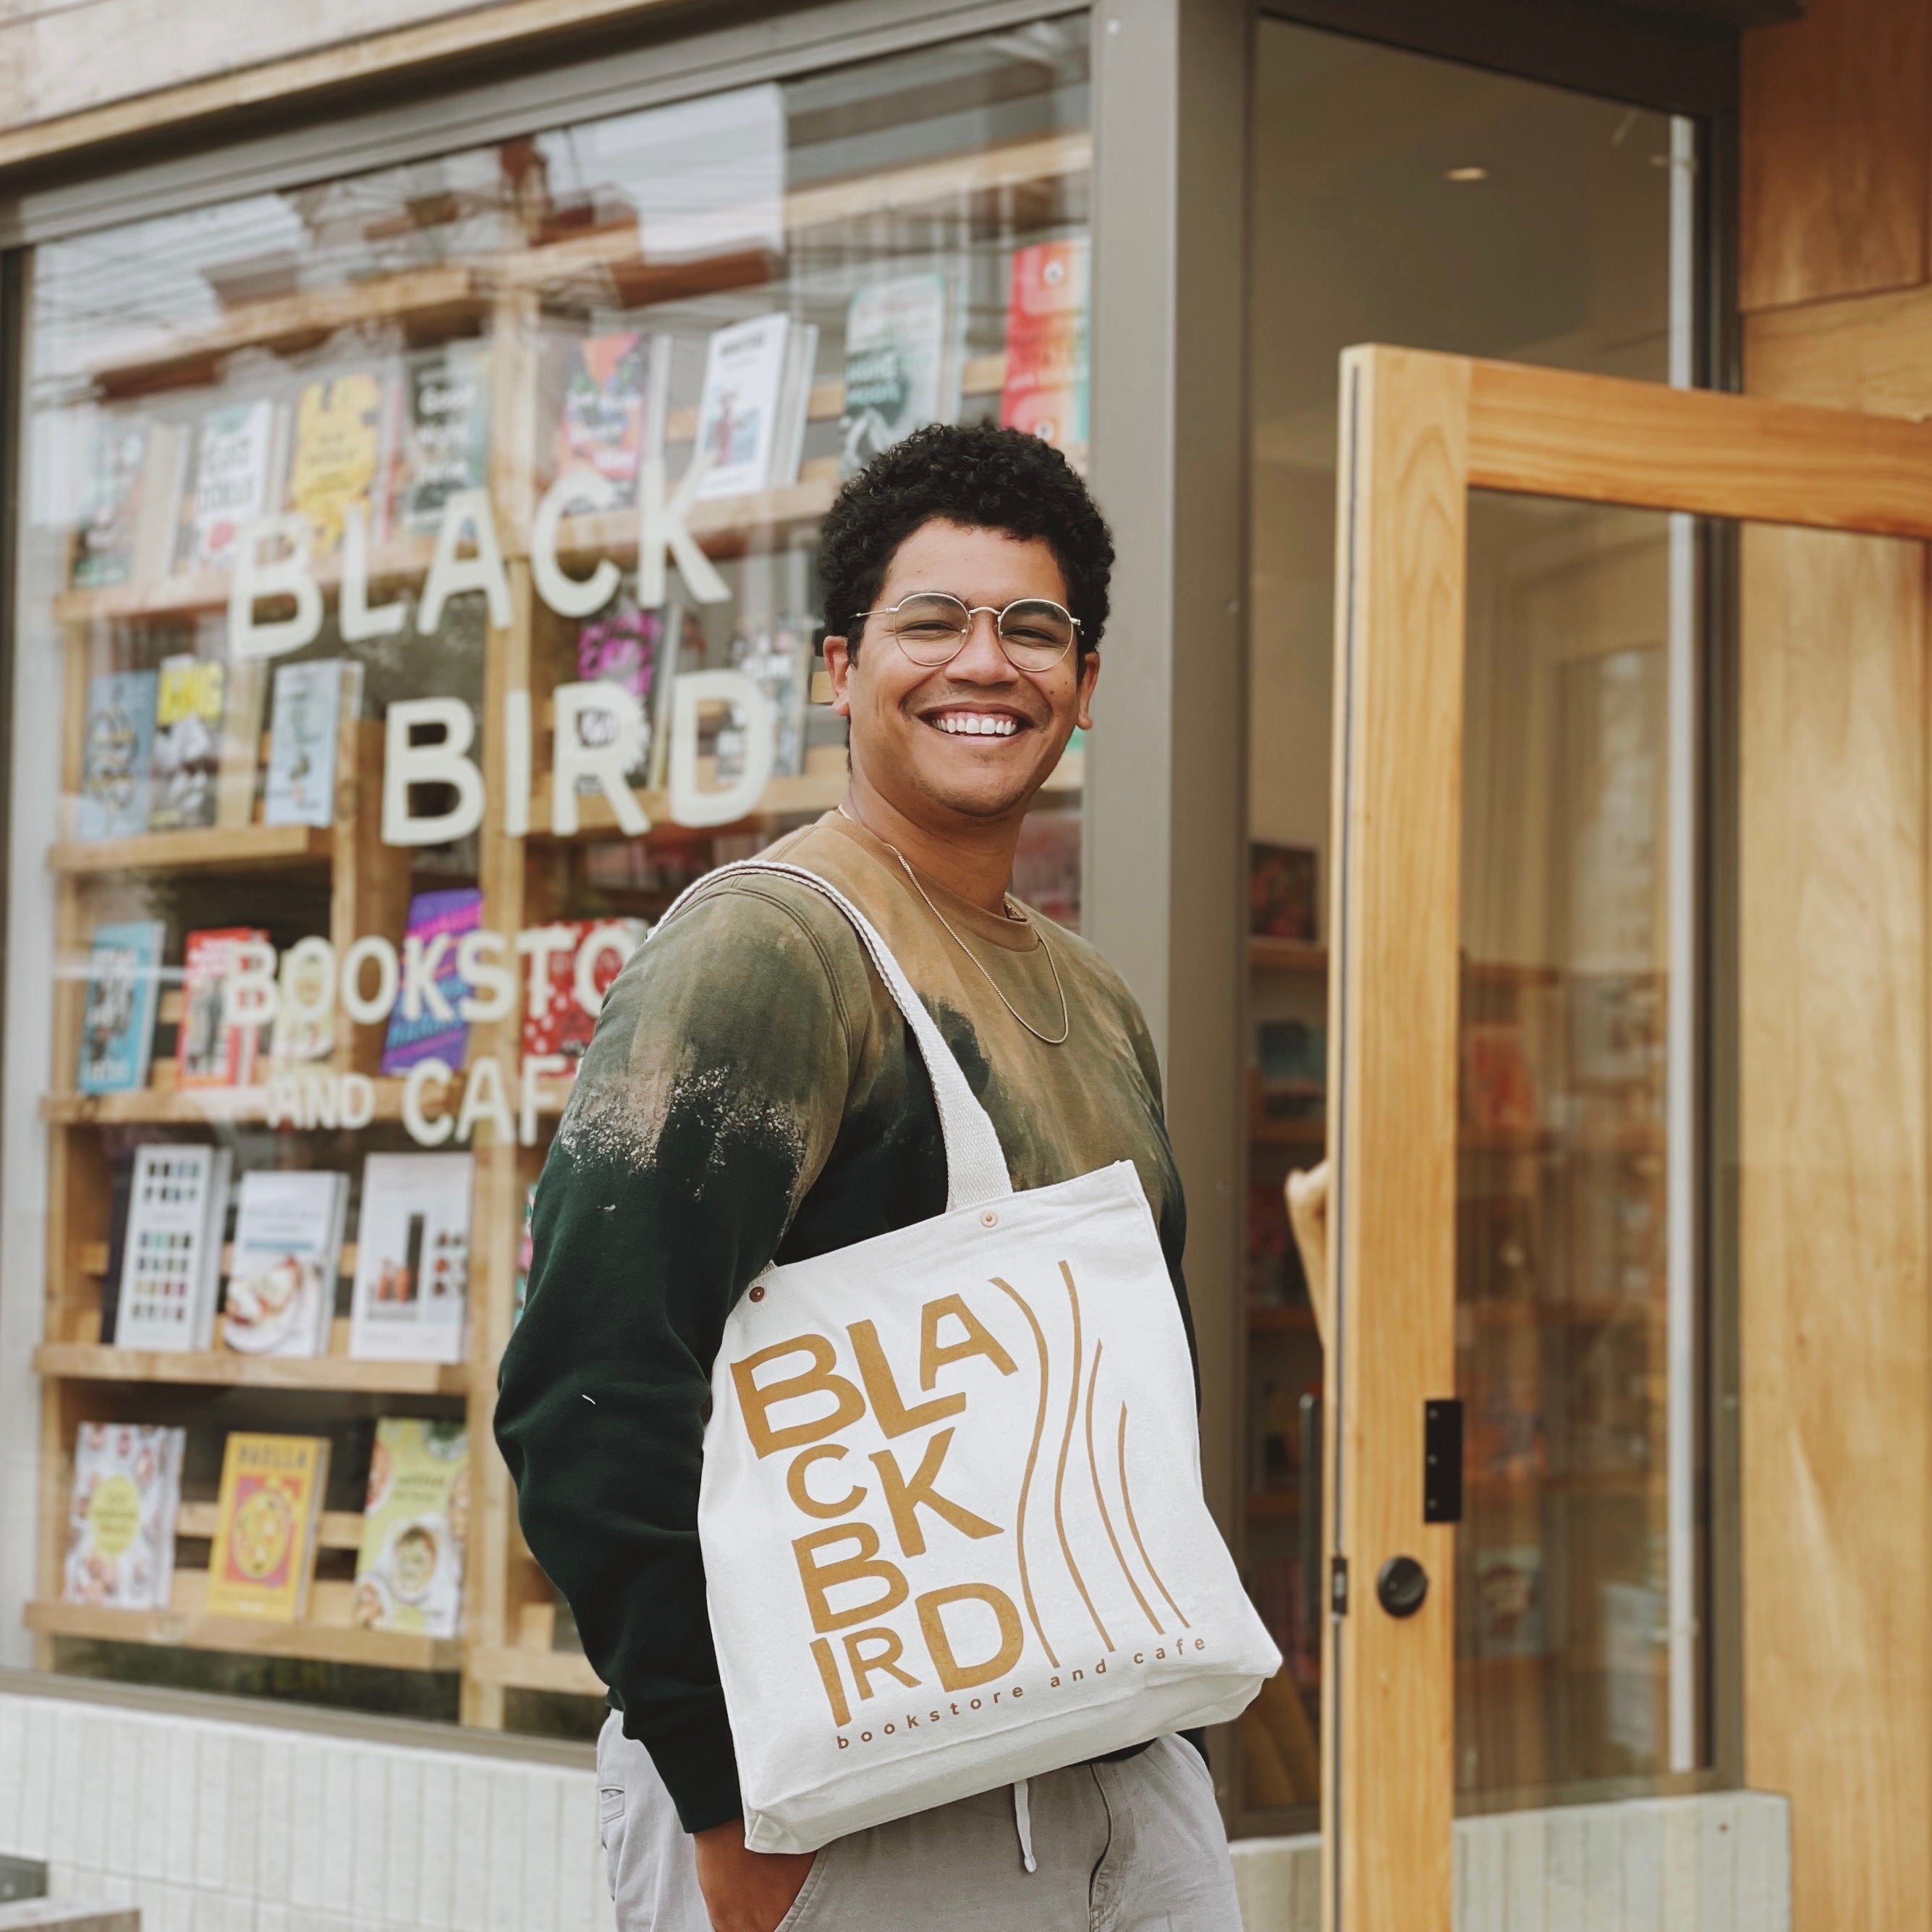 Black Bird Bookstore Tote Bag